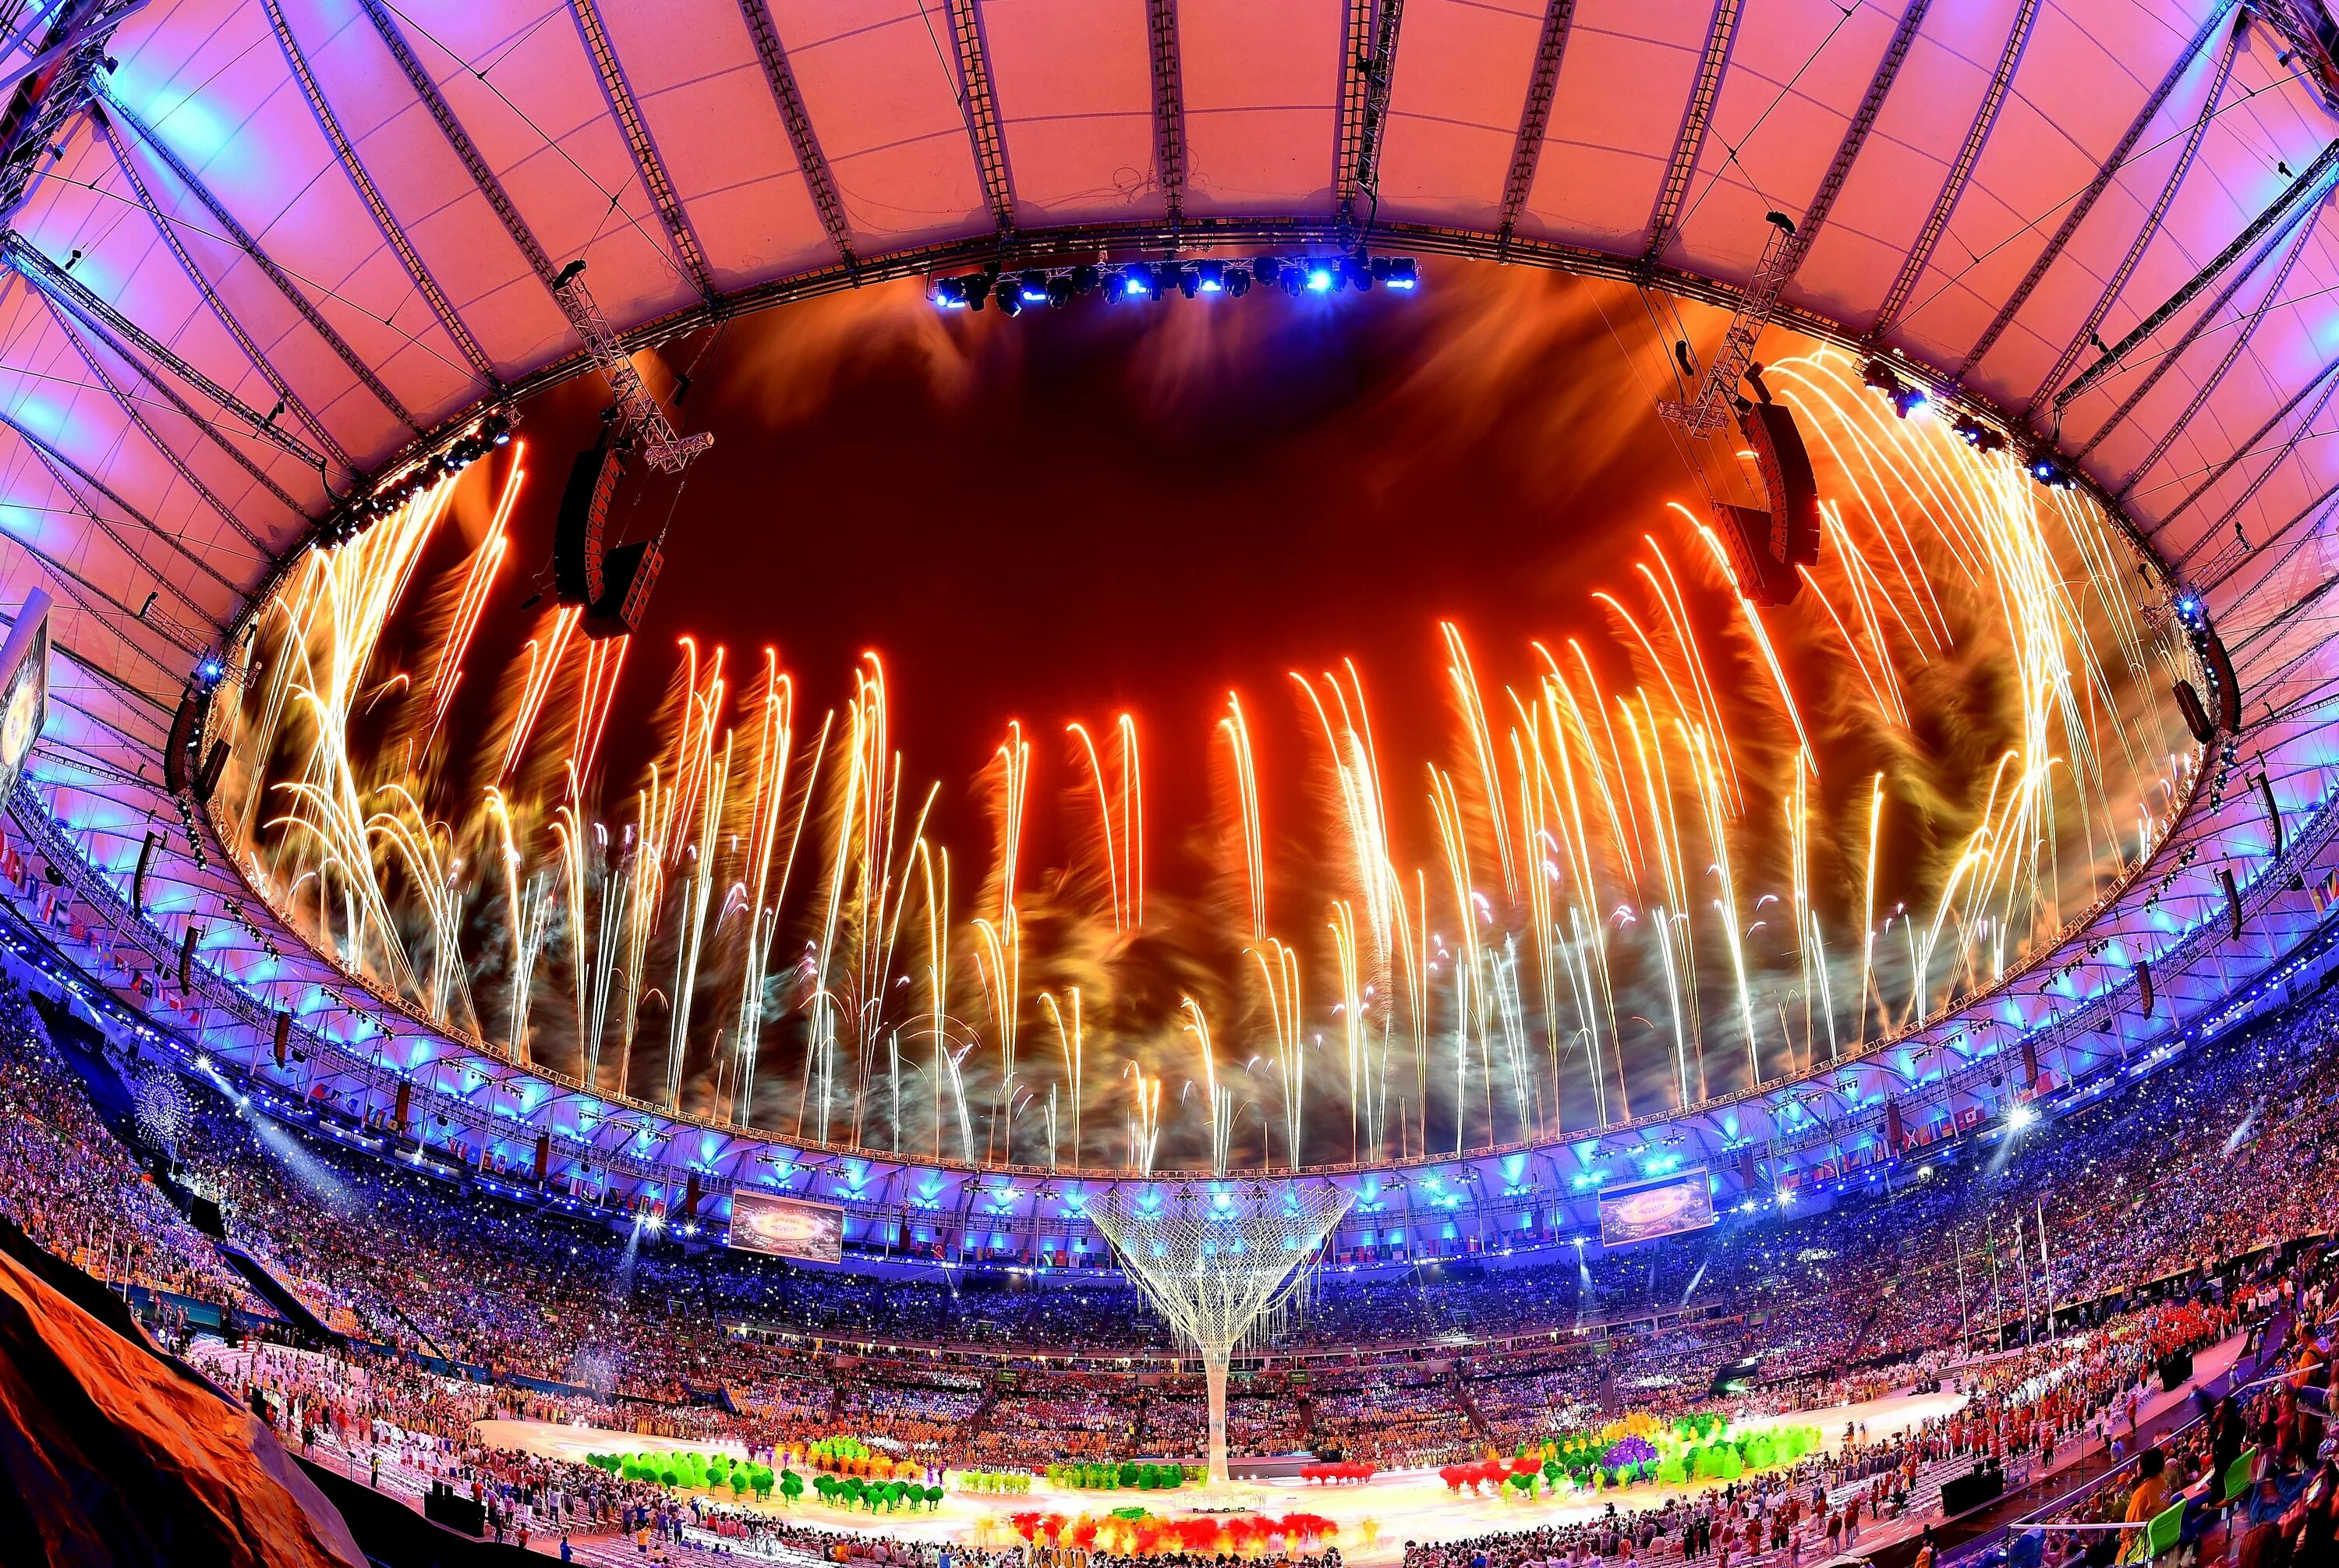 Олимпийские игры 2016 1. Маракана стадион Рио де Жанейро 2016. Стадион Маракана в Бразилии. Олимпийский стадион «Маракана». Олимпийский стадион Рио де Жанейро.